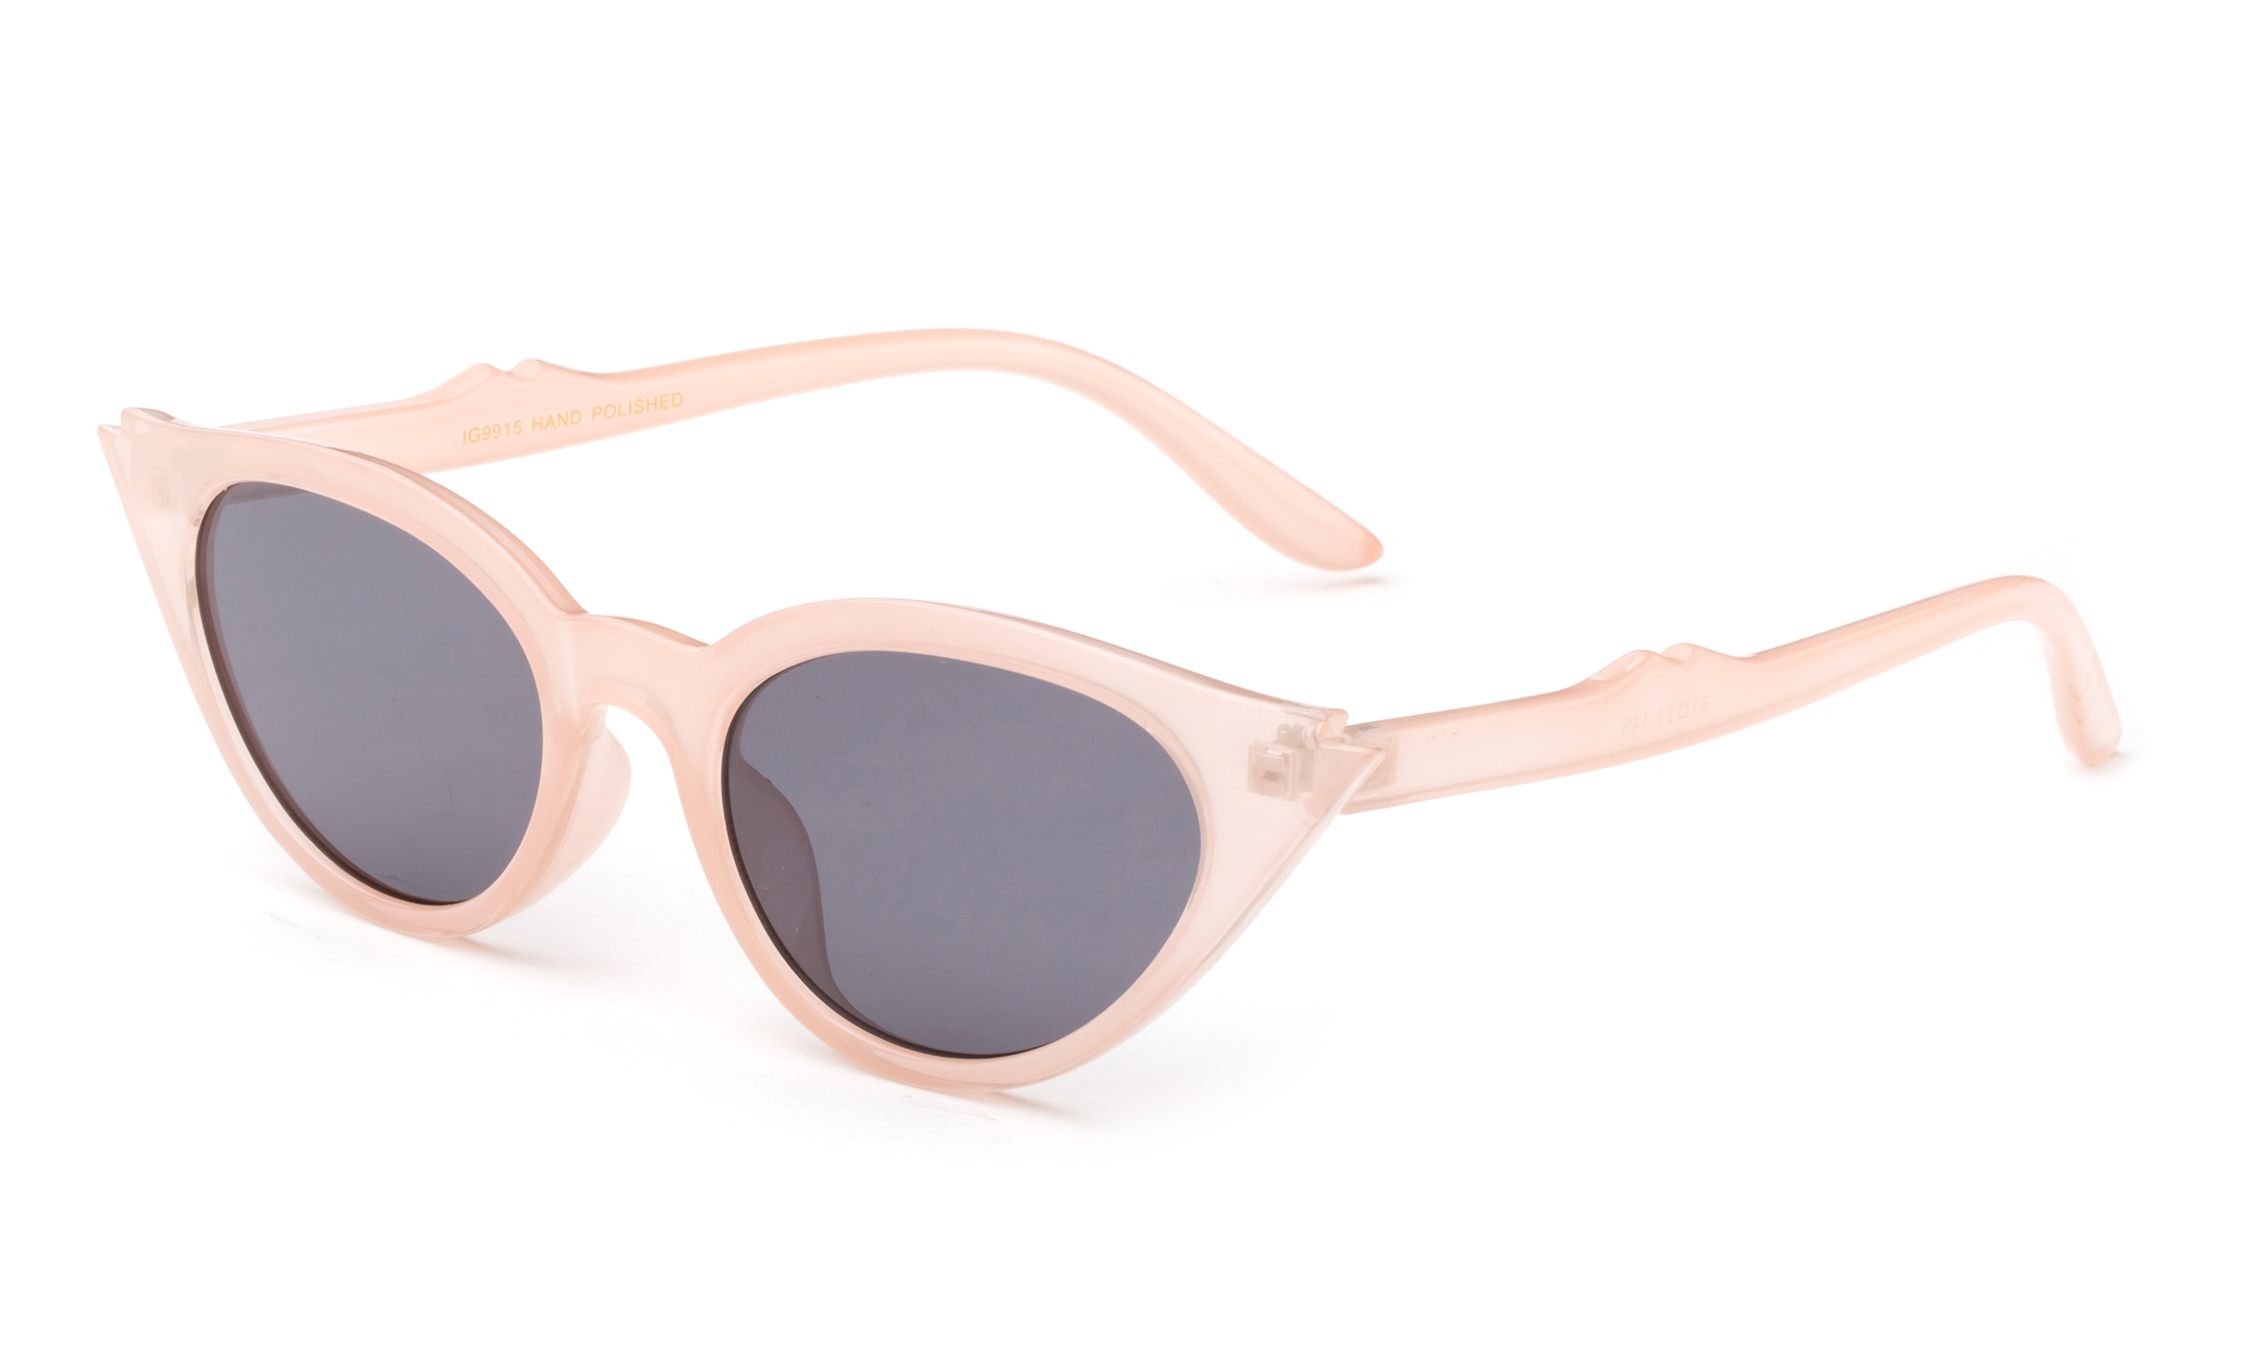 Designer Inspired Women Cat eye Sunglasses Cateye Retro Fashion Sunglasses for Women Vintage Sunglasses Small - image 2 of 3